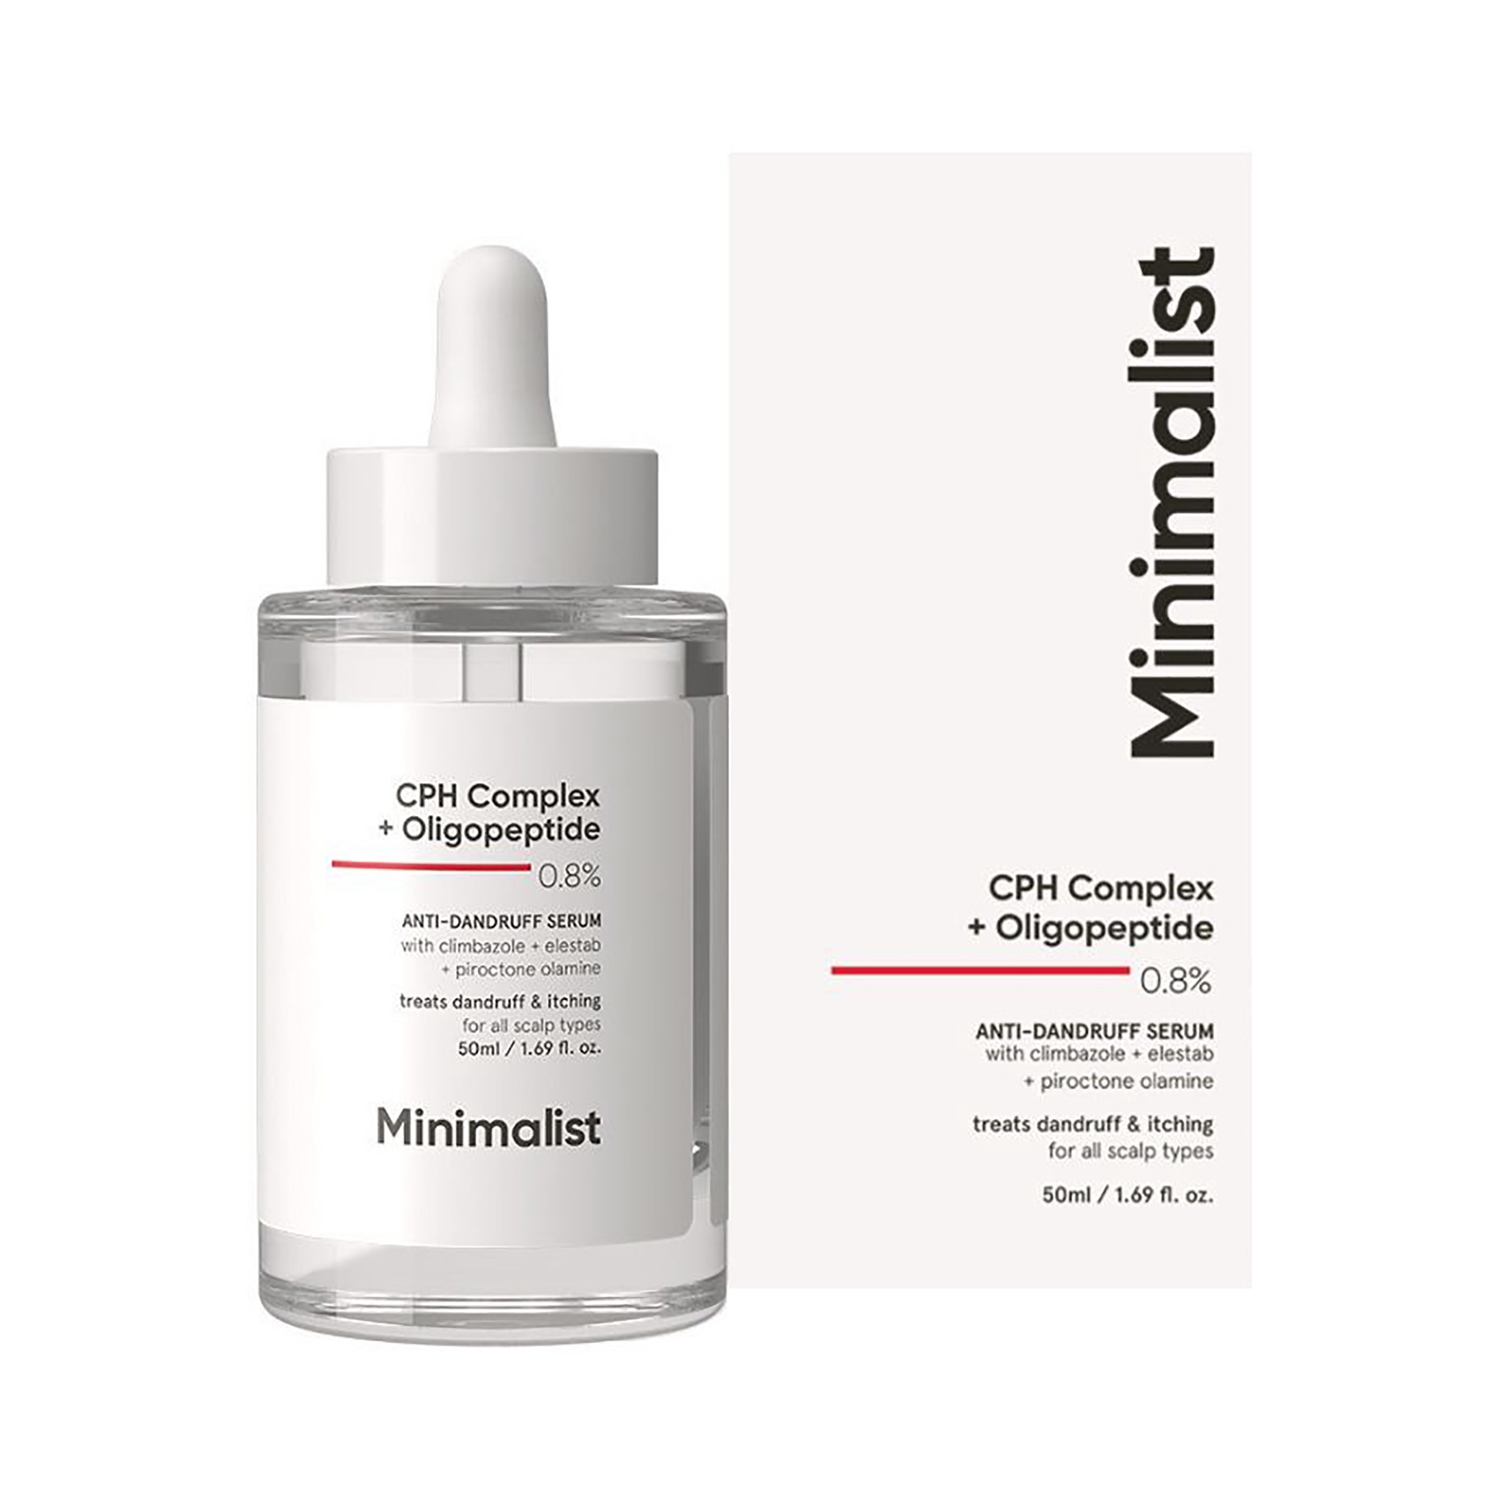 Minimalist | Minimalist 0.8% CPH Complex + Oligopeptide Anti-Dandruff Serum treats dandruff & itching (50ml)